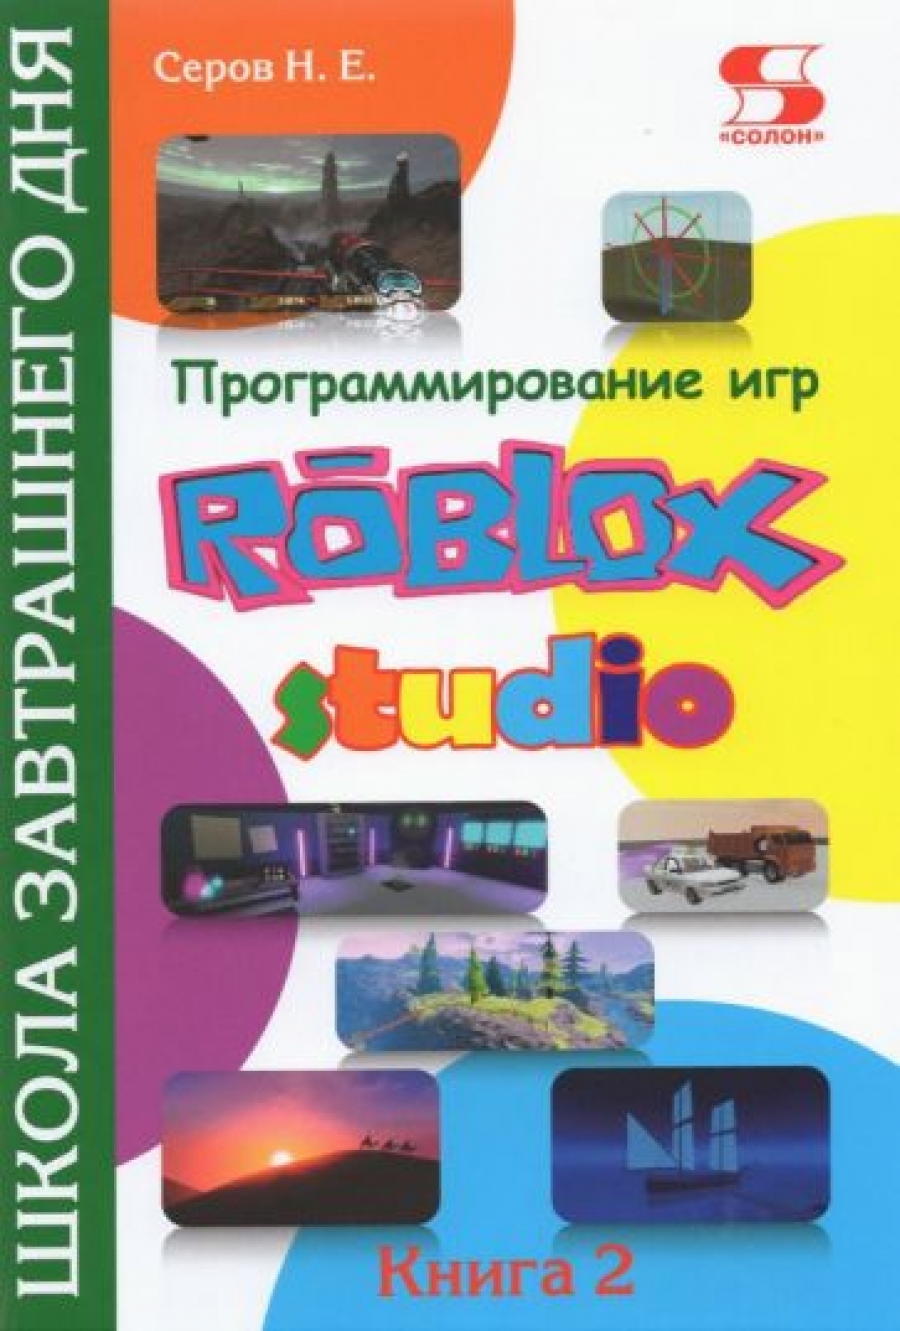  .    Roblox Studio.  2.    